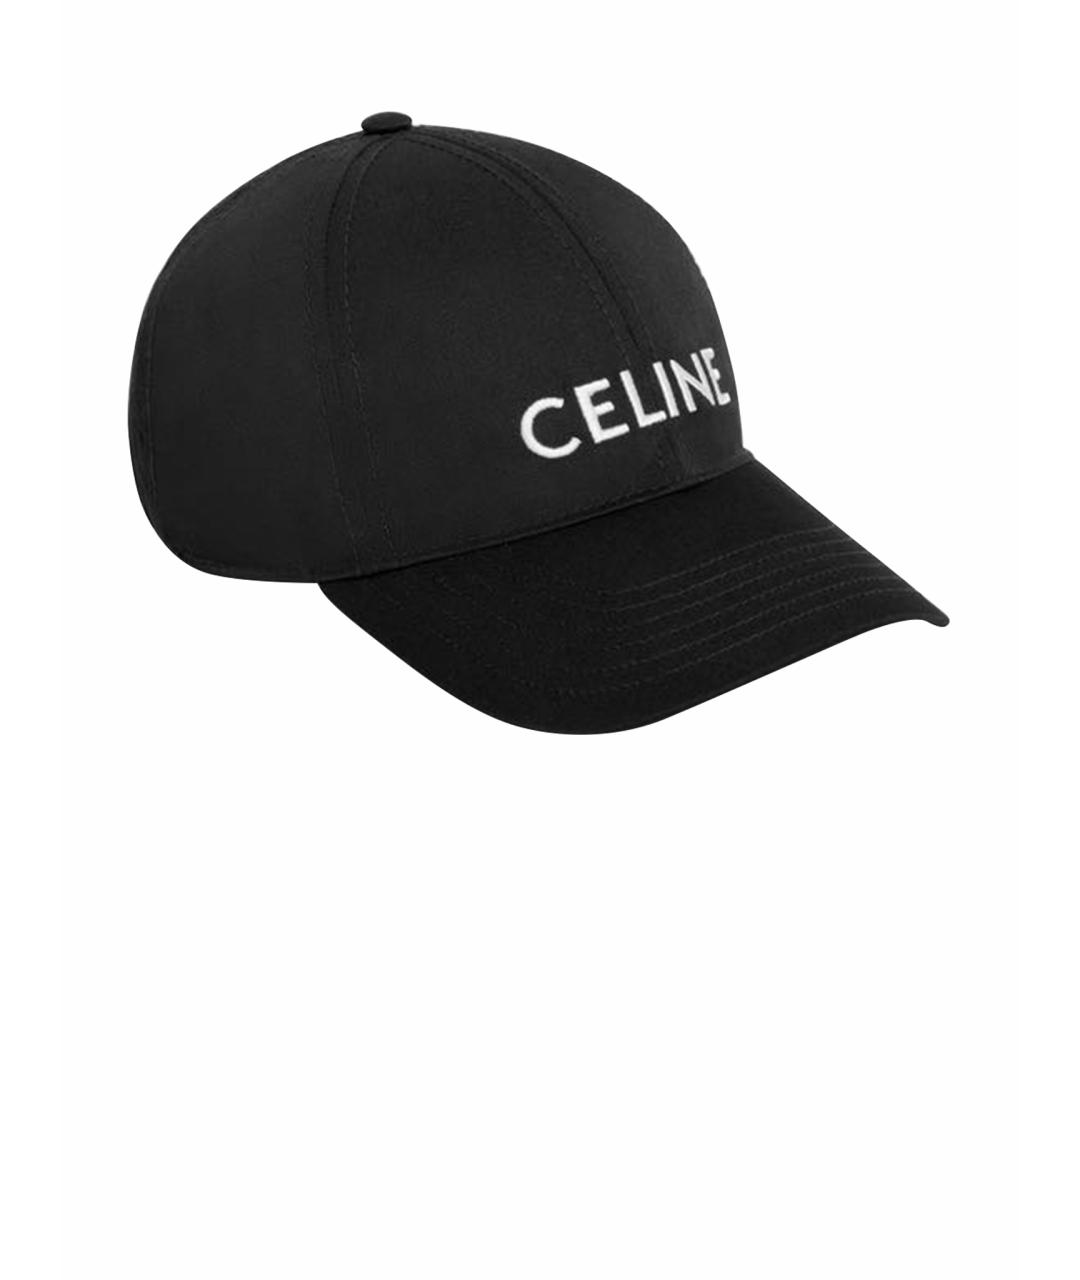 CELINE PRE-OWNED Черная хлопковая кепка, фото 1